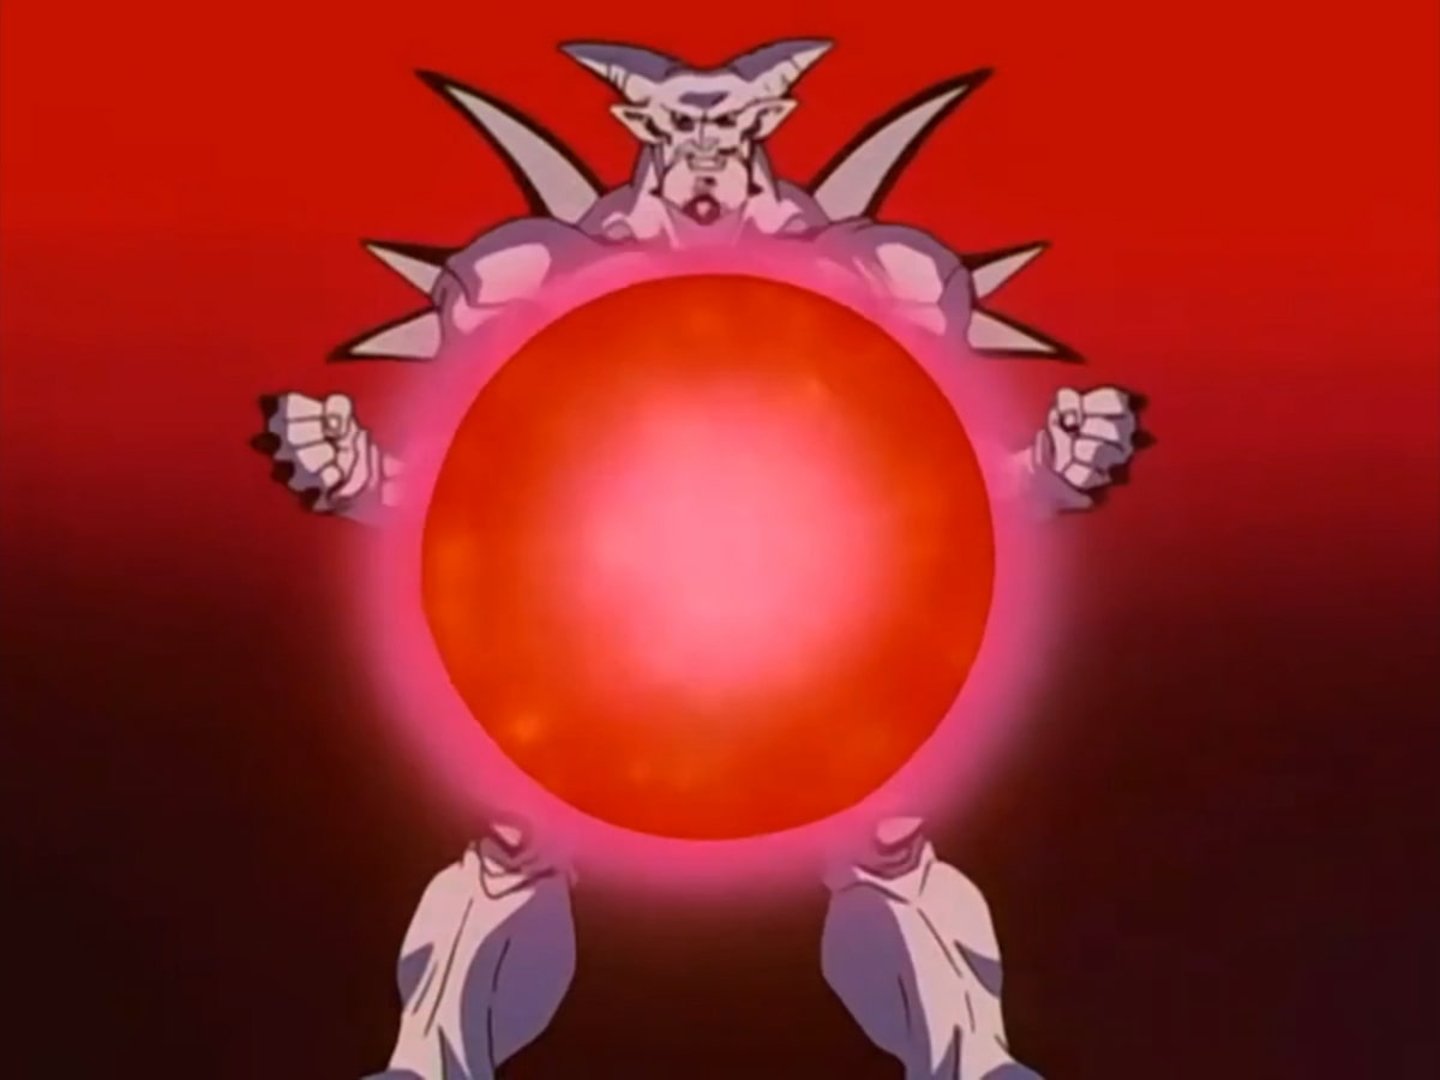 Omega Shenron utilozando la bola de energía negativan Dragon Ball GT 